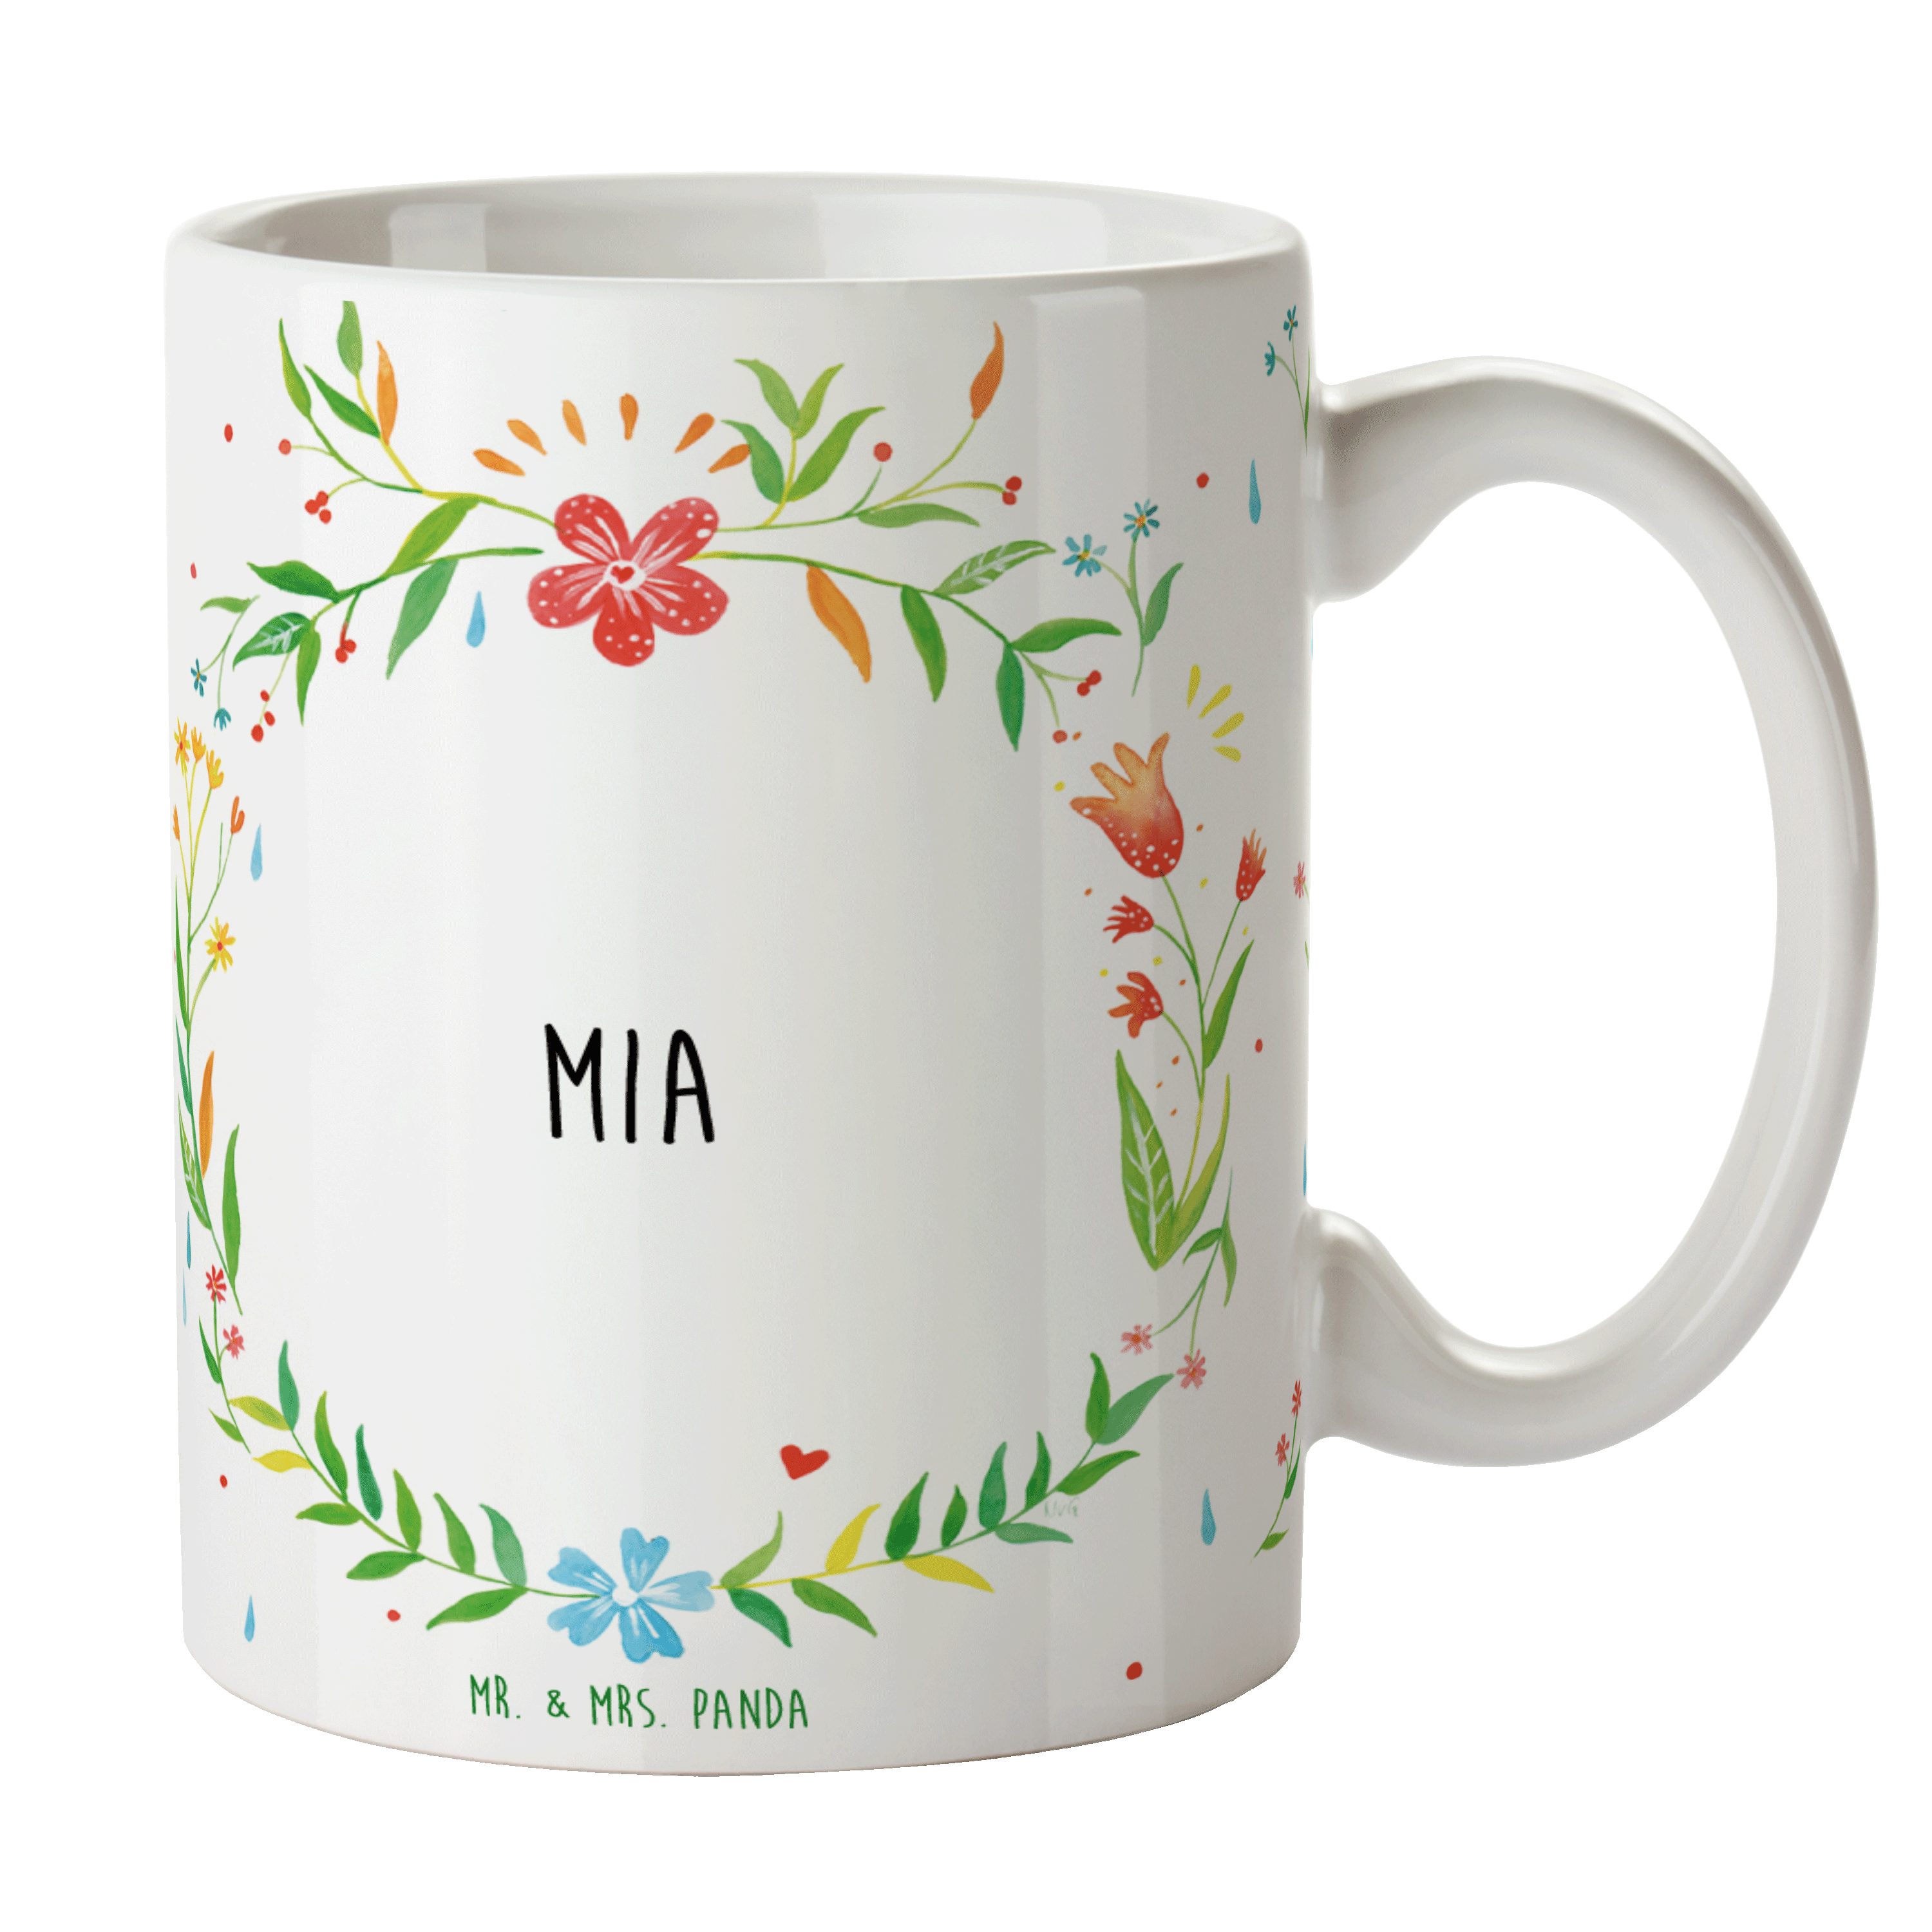 Mr. & Mrs. Panda Tasse Mia - Geschenk, Becher, Porzellantasse, Tasse, Teebecher, Kaffeebeche, Keramik | Tassen